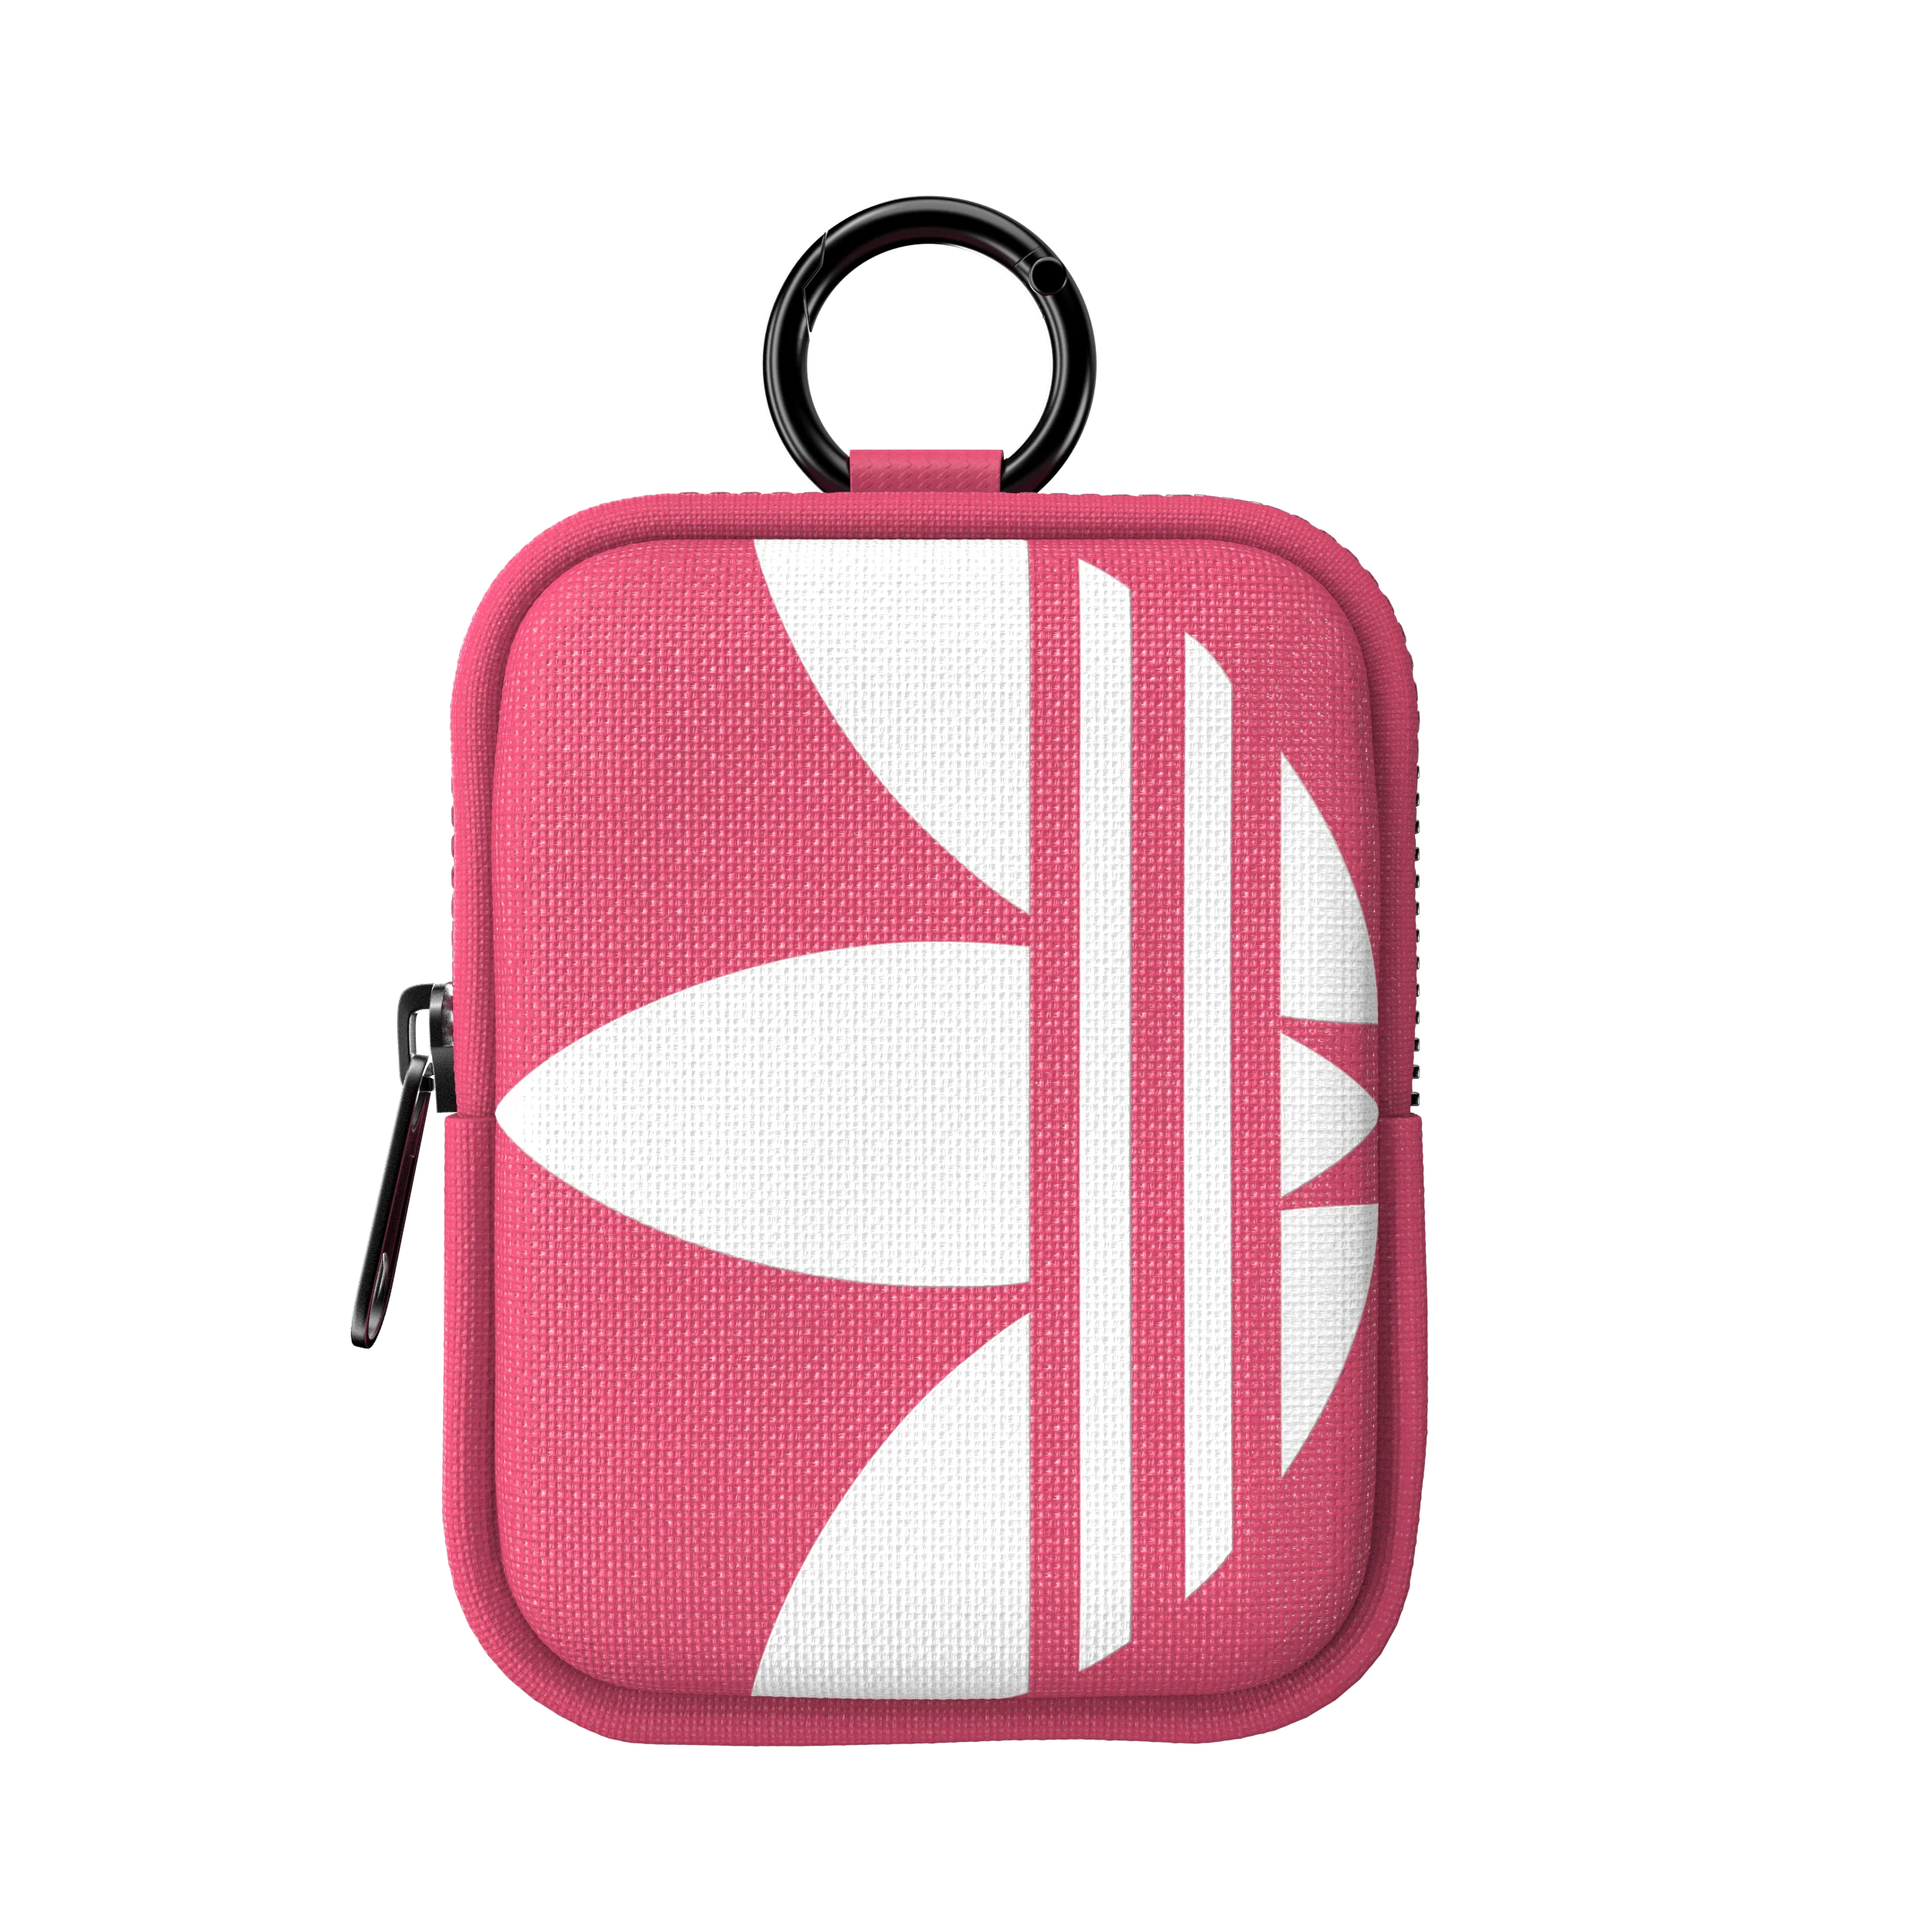 Adidas Oiginals Universal City Pouch Mini - Pink